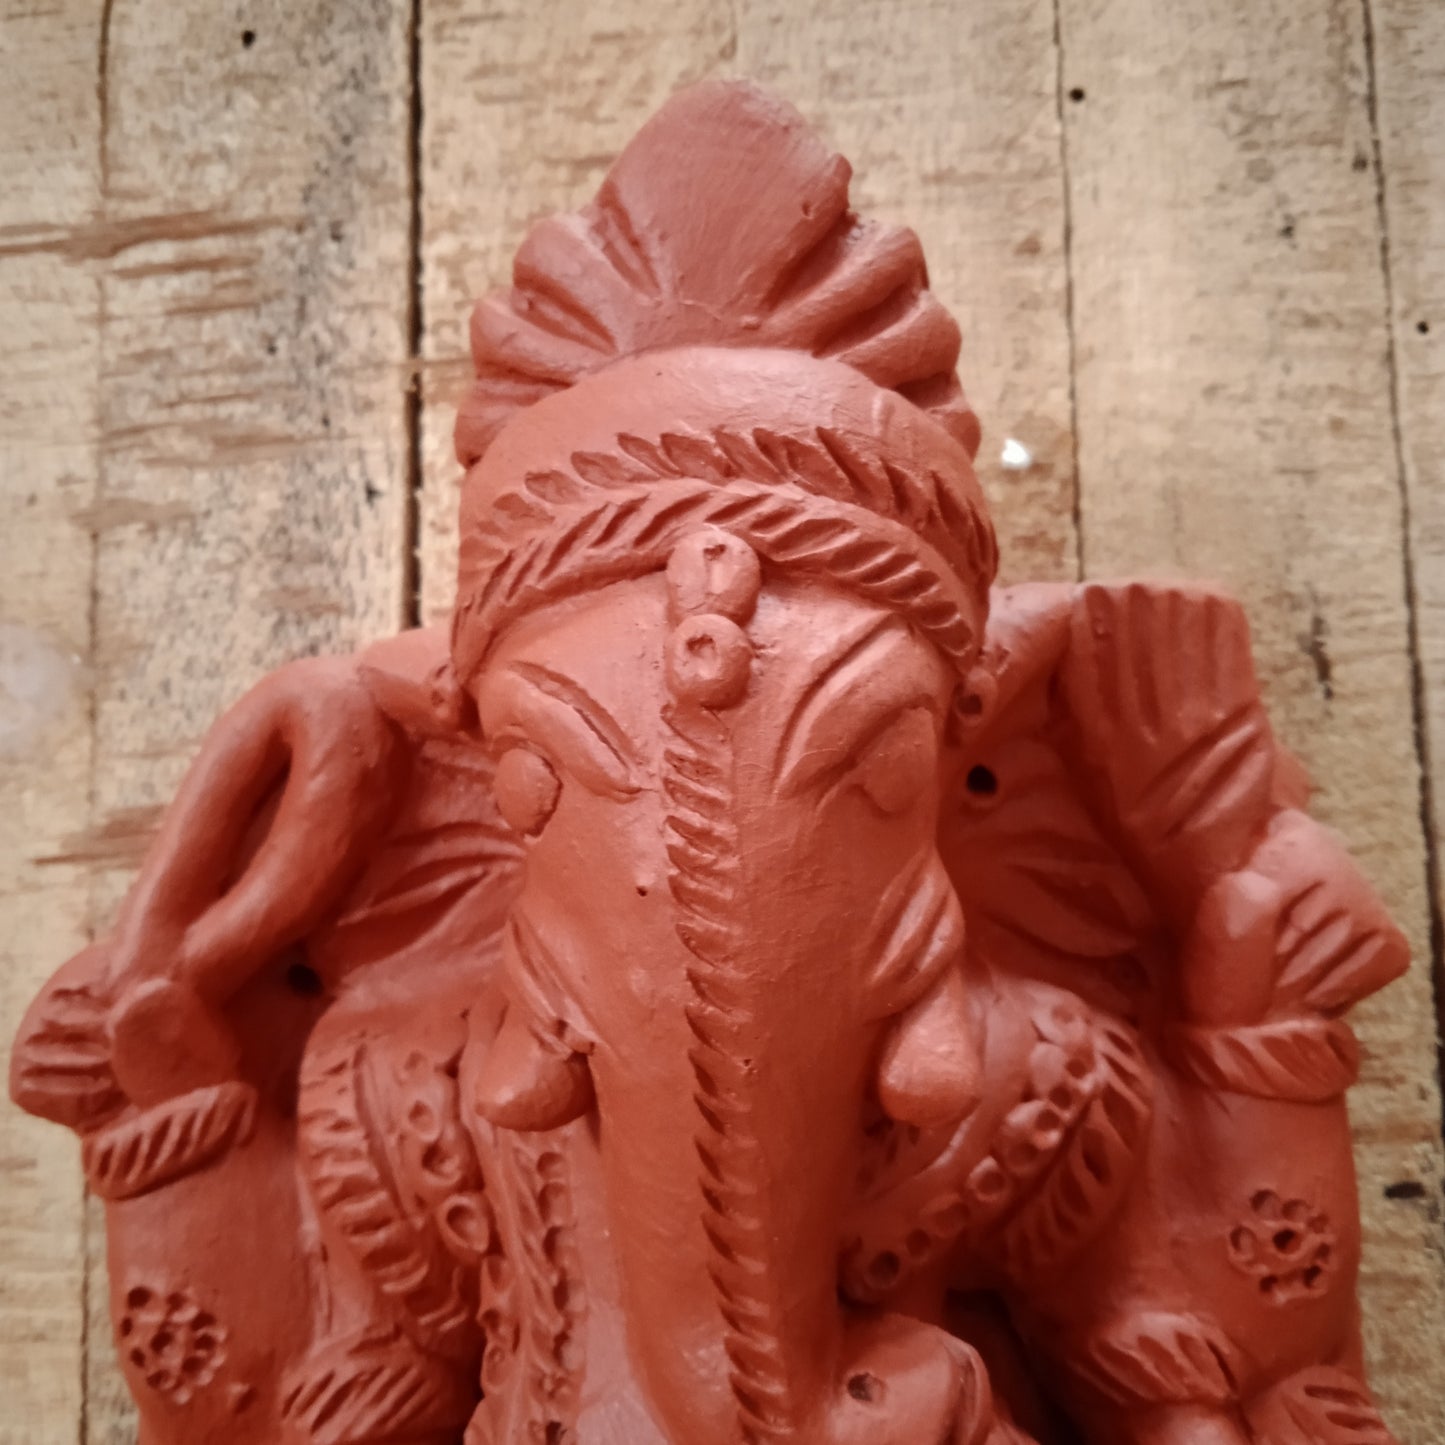 Ganesha 6"